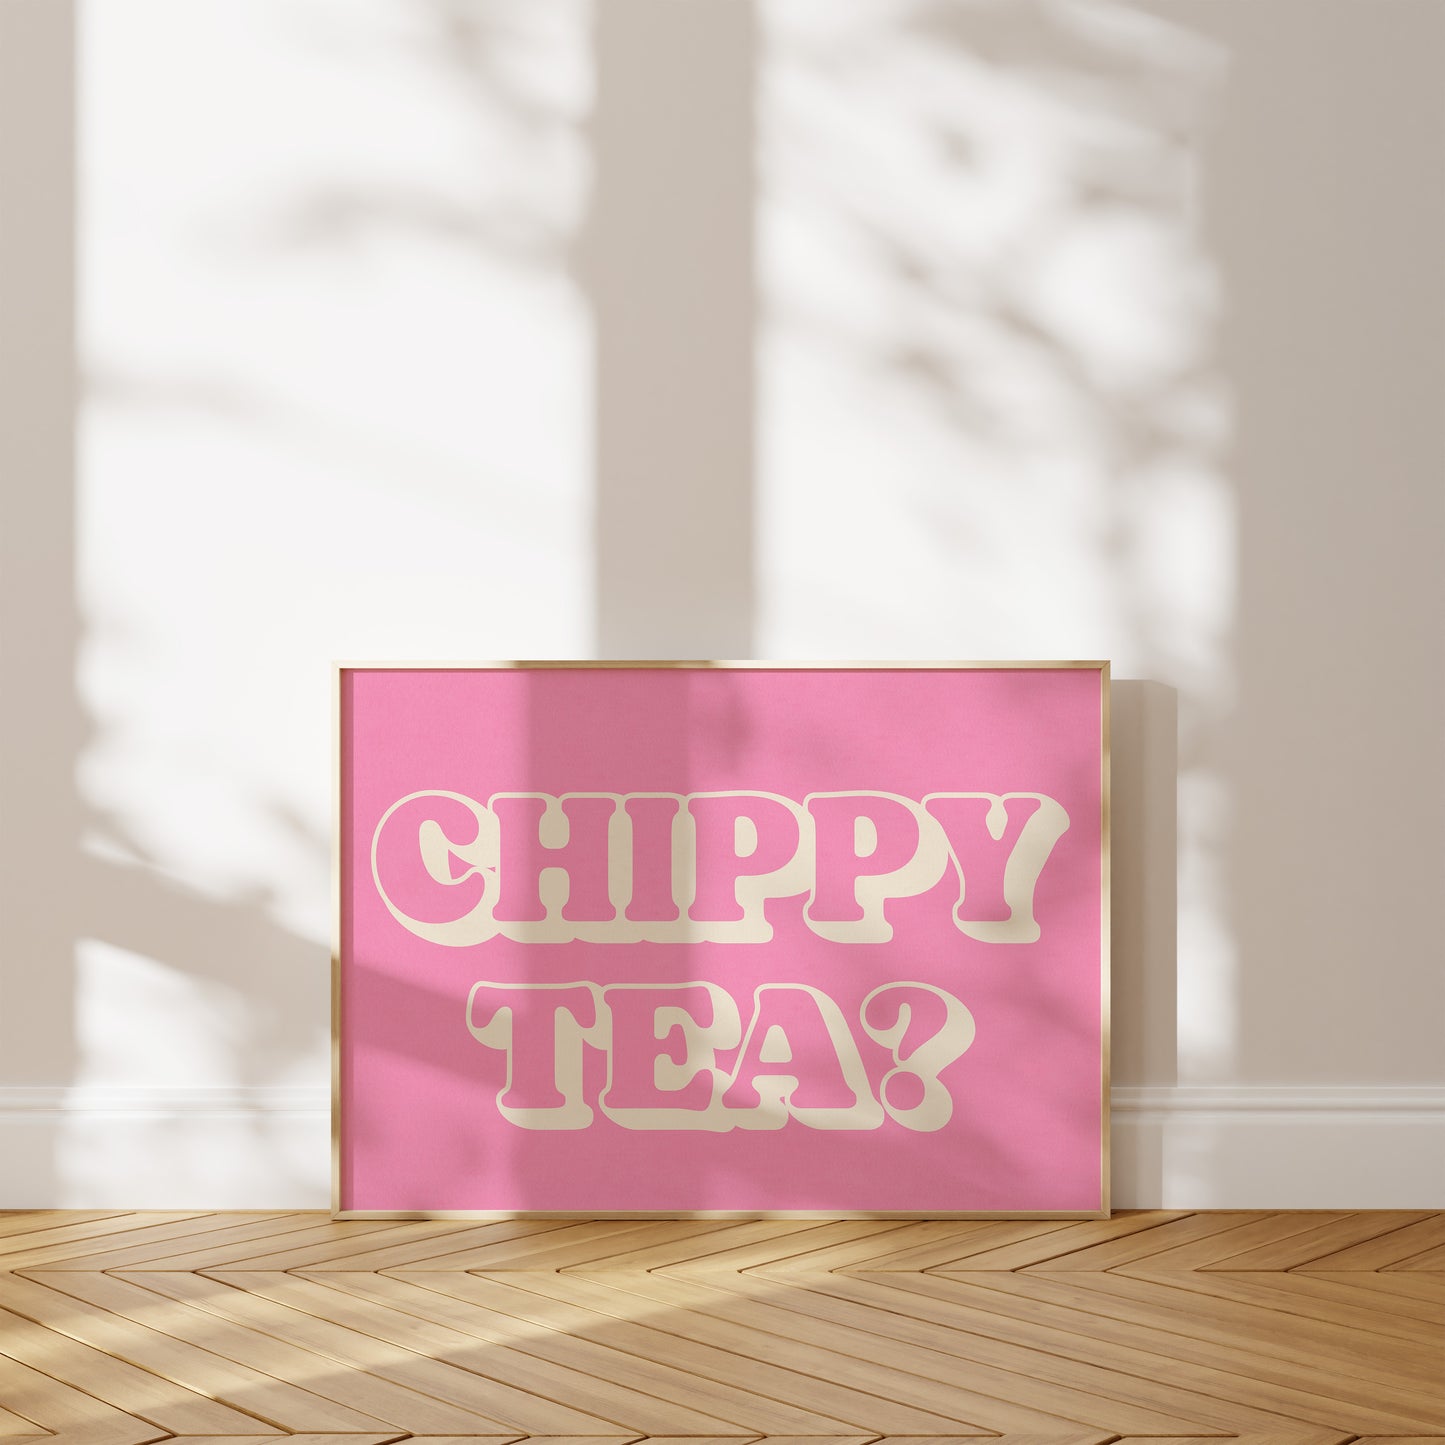 Chippy Tea? Print